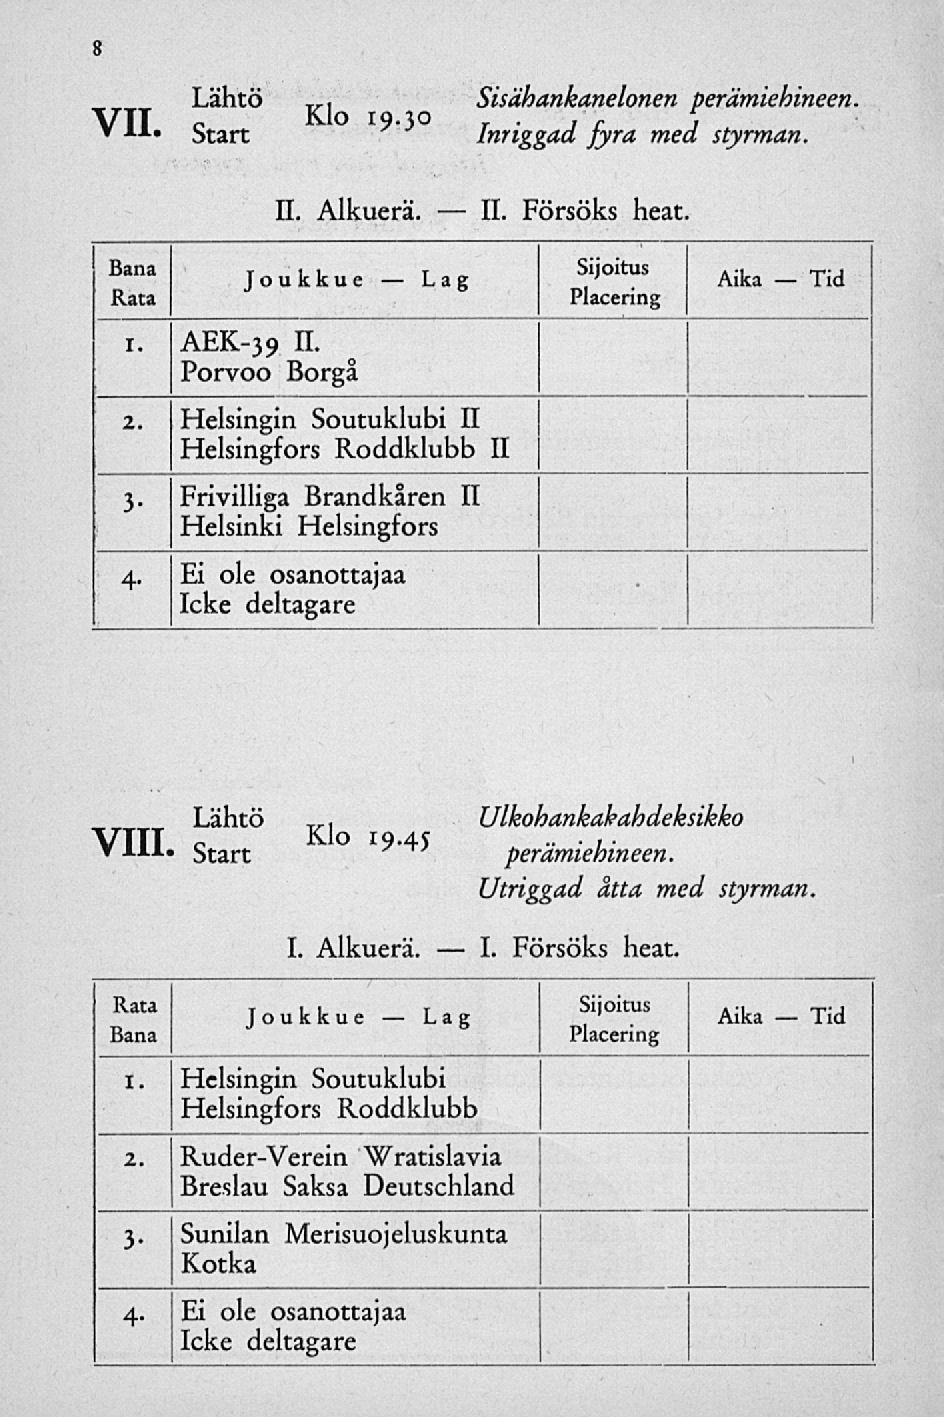 11. 8 VII., Klo 19.30 7 Sisähankanelonen perämiehineen Inriggad fyra med styrman. 11. Alkuerä. Försöks heat Sijoitus I AEK-39 11.